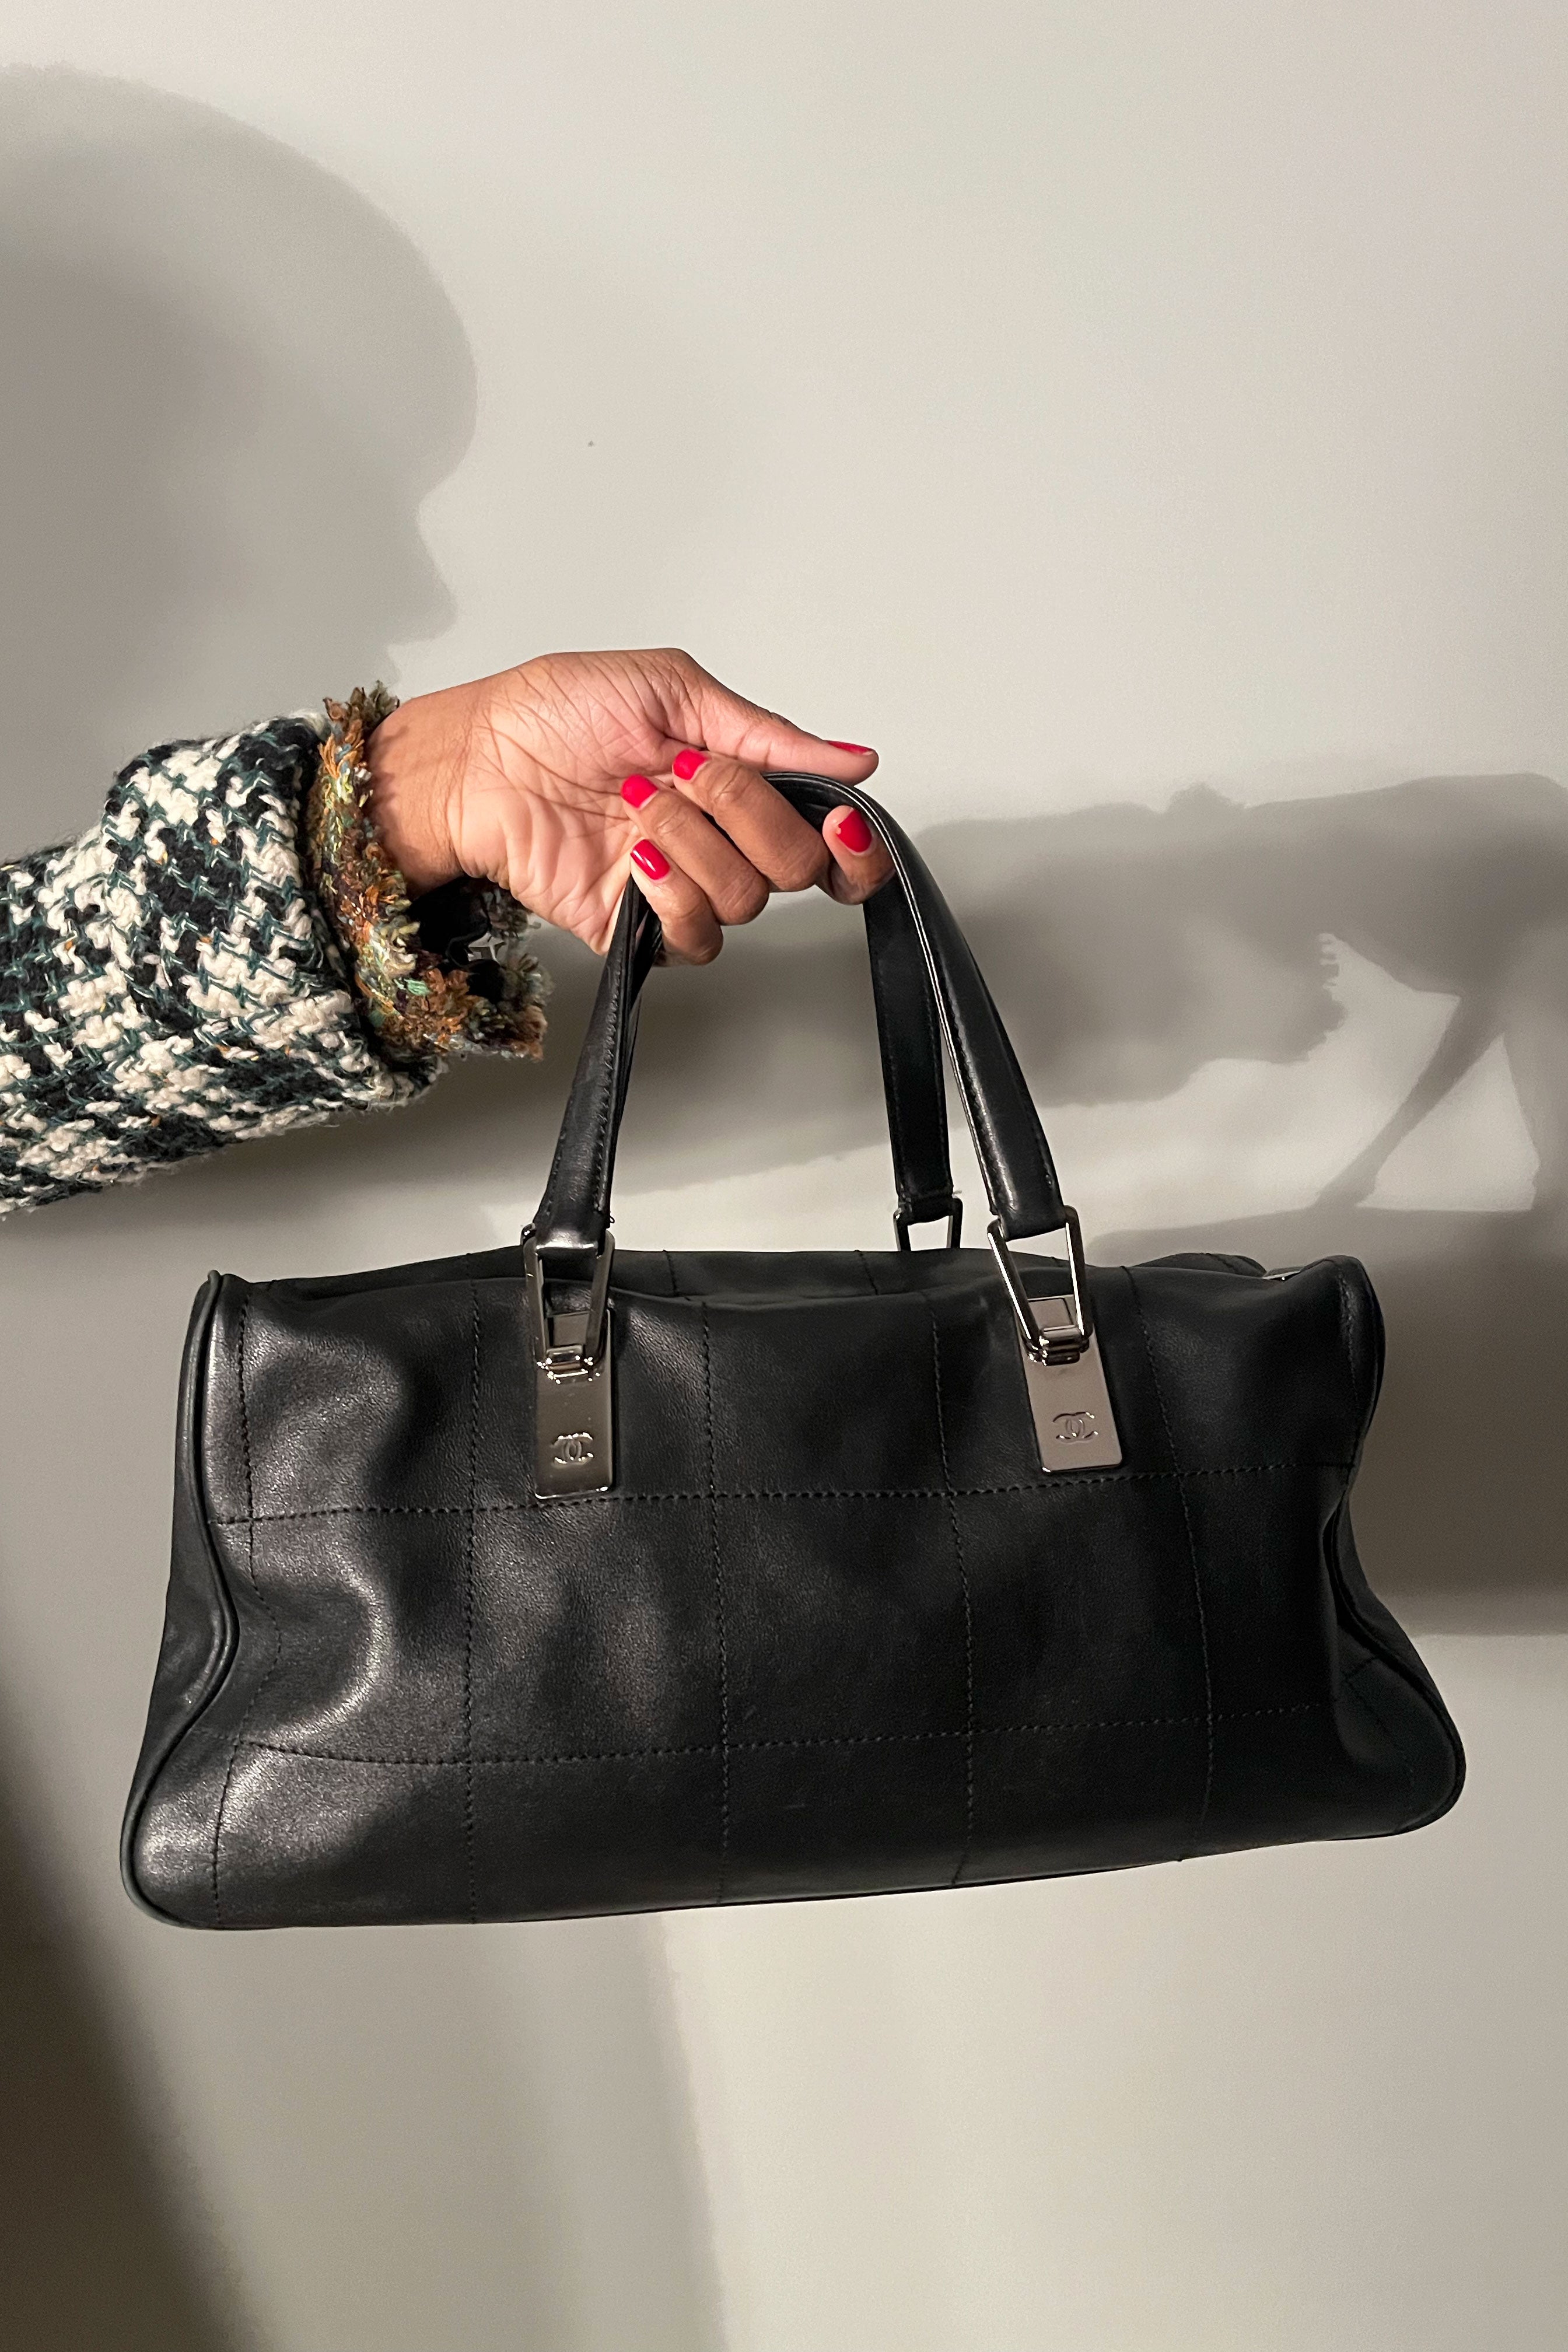 Chanel Black Chocolate Bar Handbag